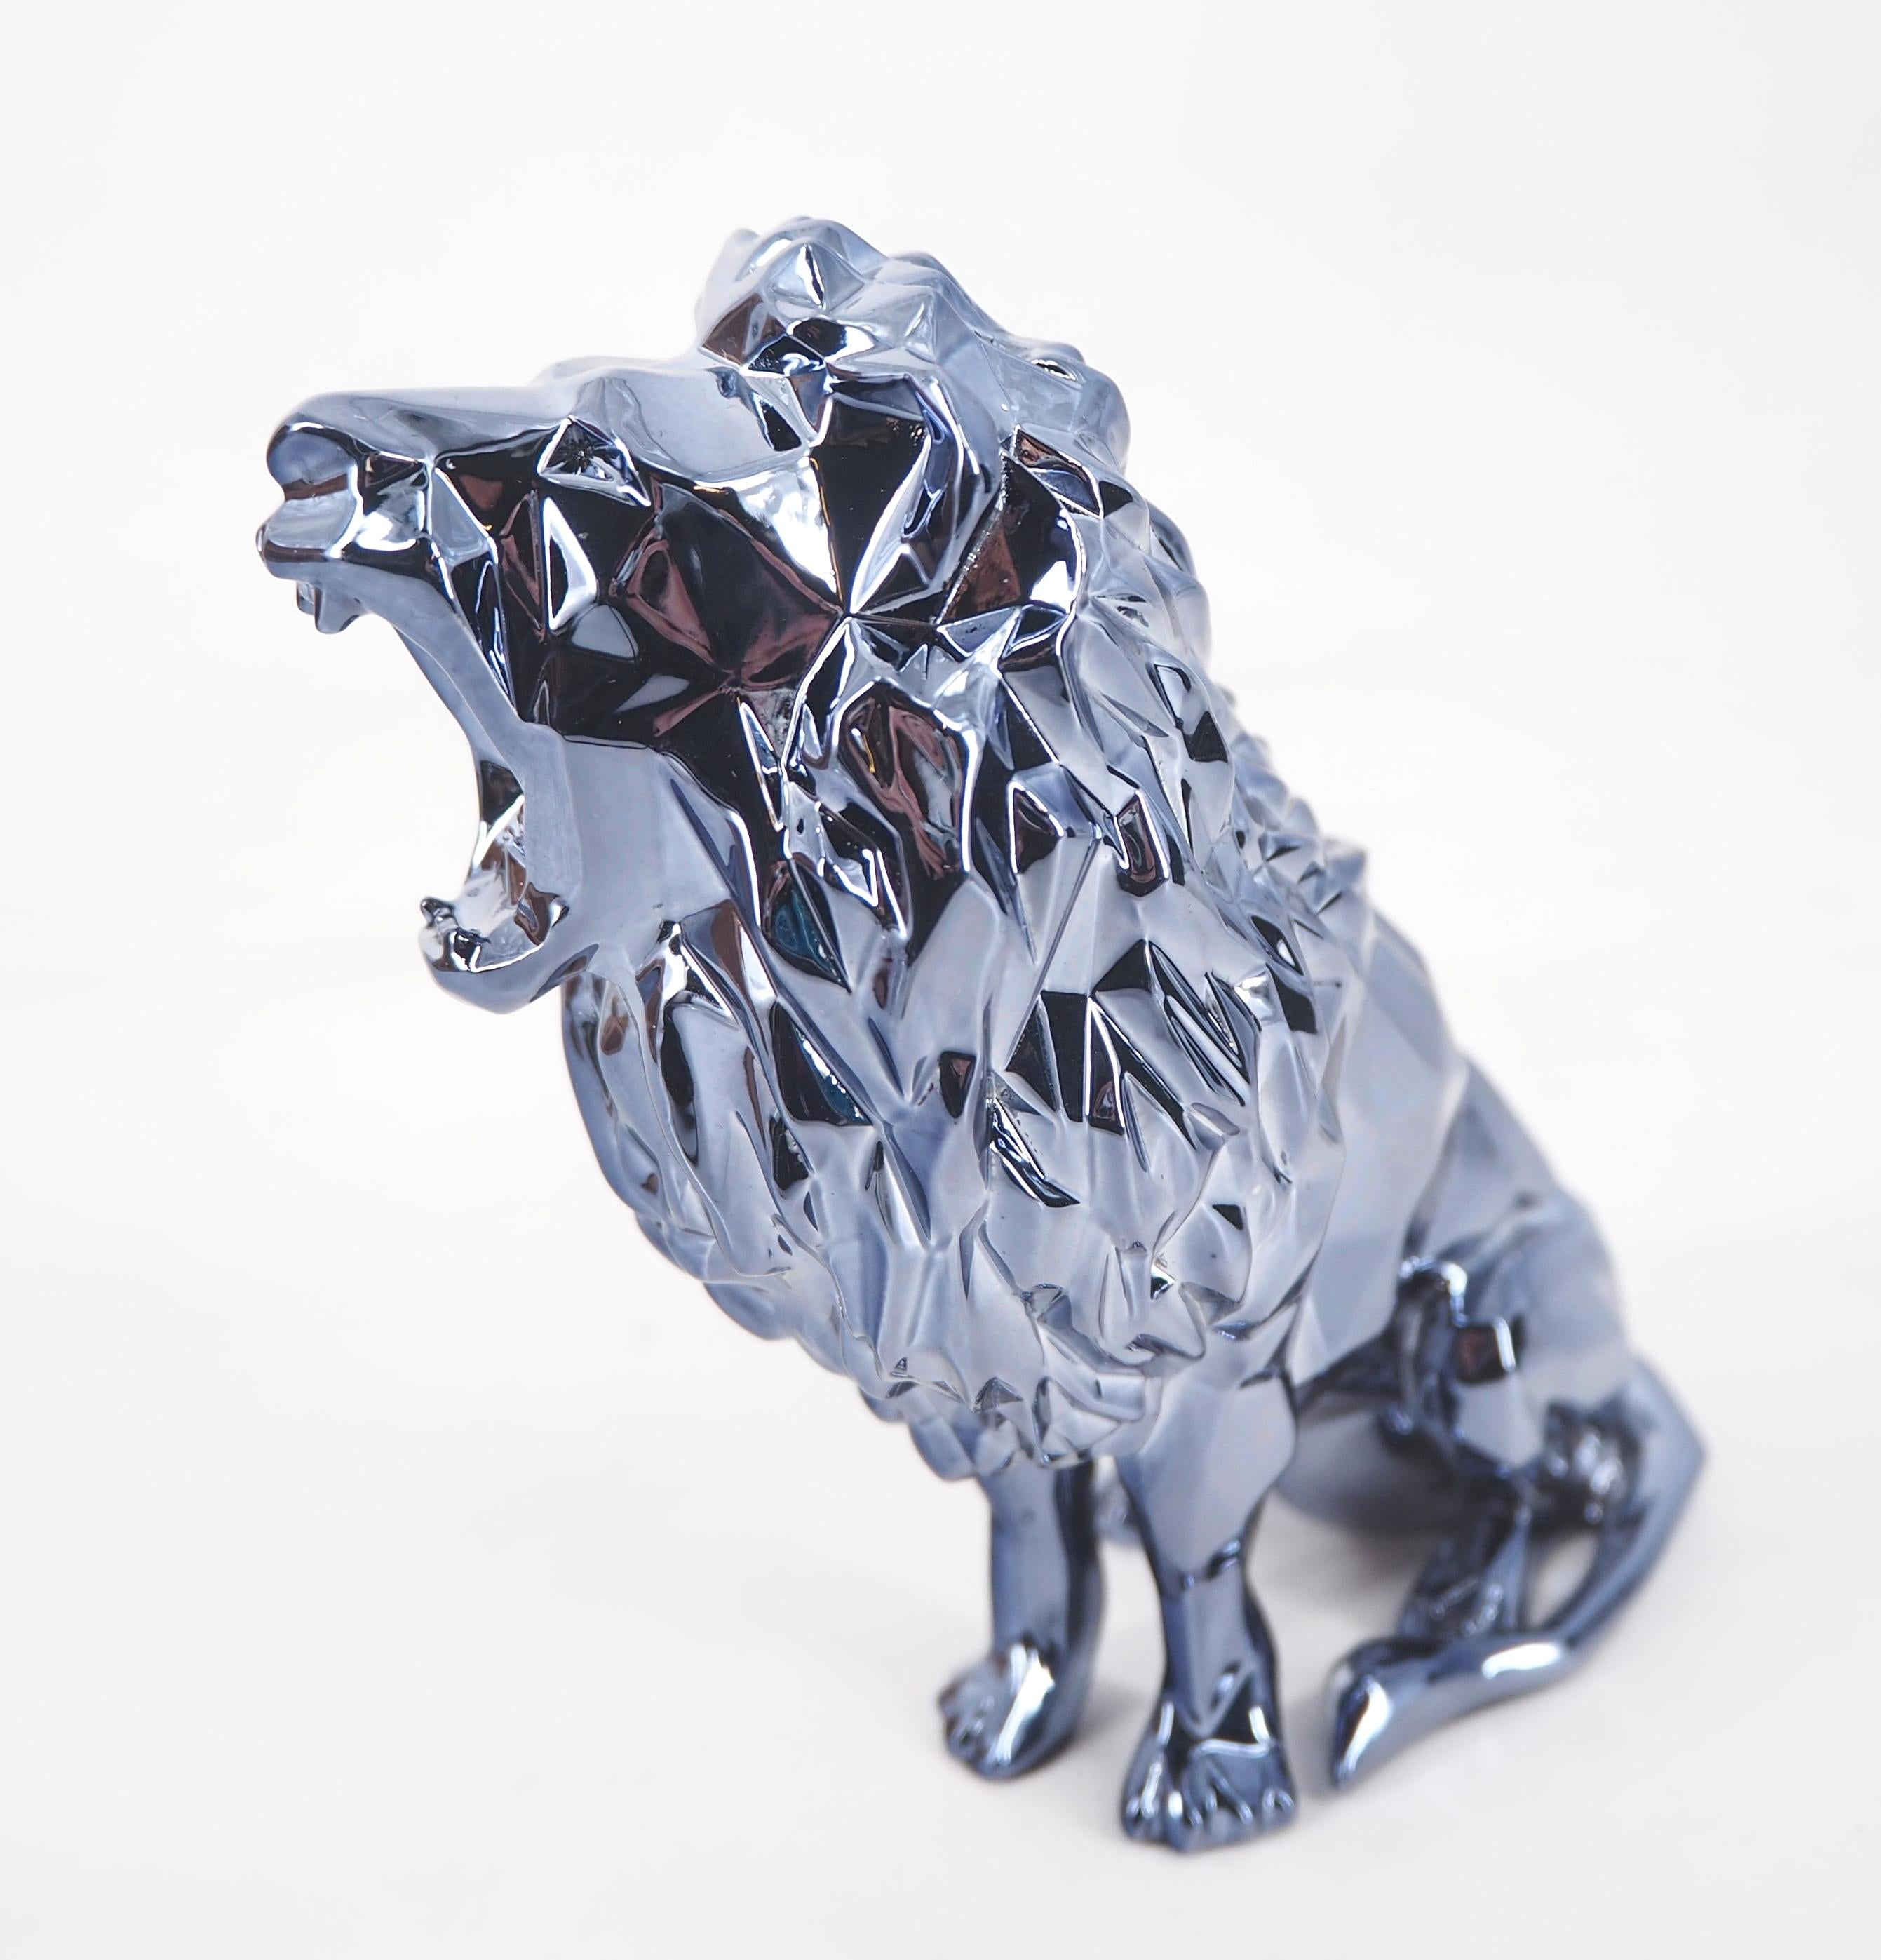 Roaring Lion Spirit (Petrol edition) - Sculpture in original box with artist coa For Sale 1